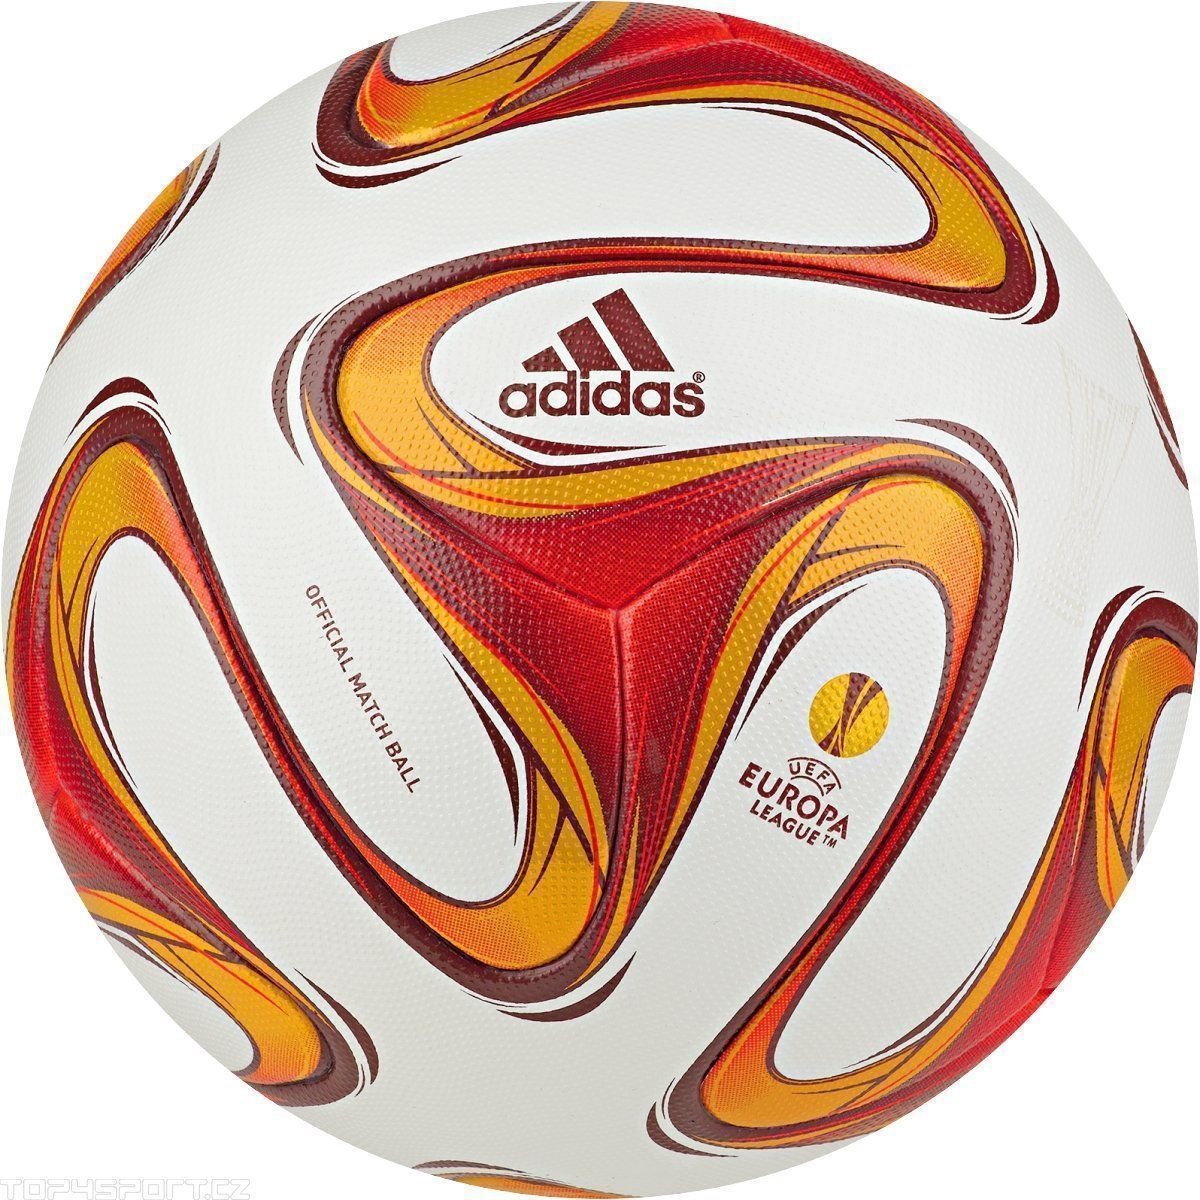 New Replica Adidas Europa League New Soccer Ball Made In ...